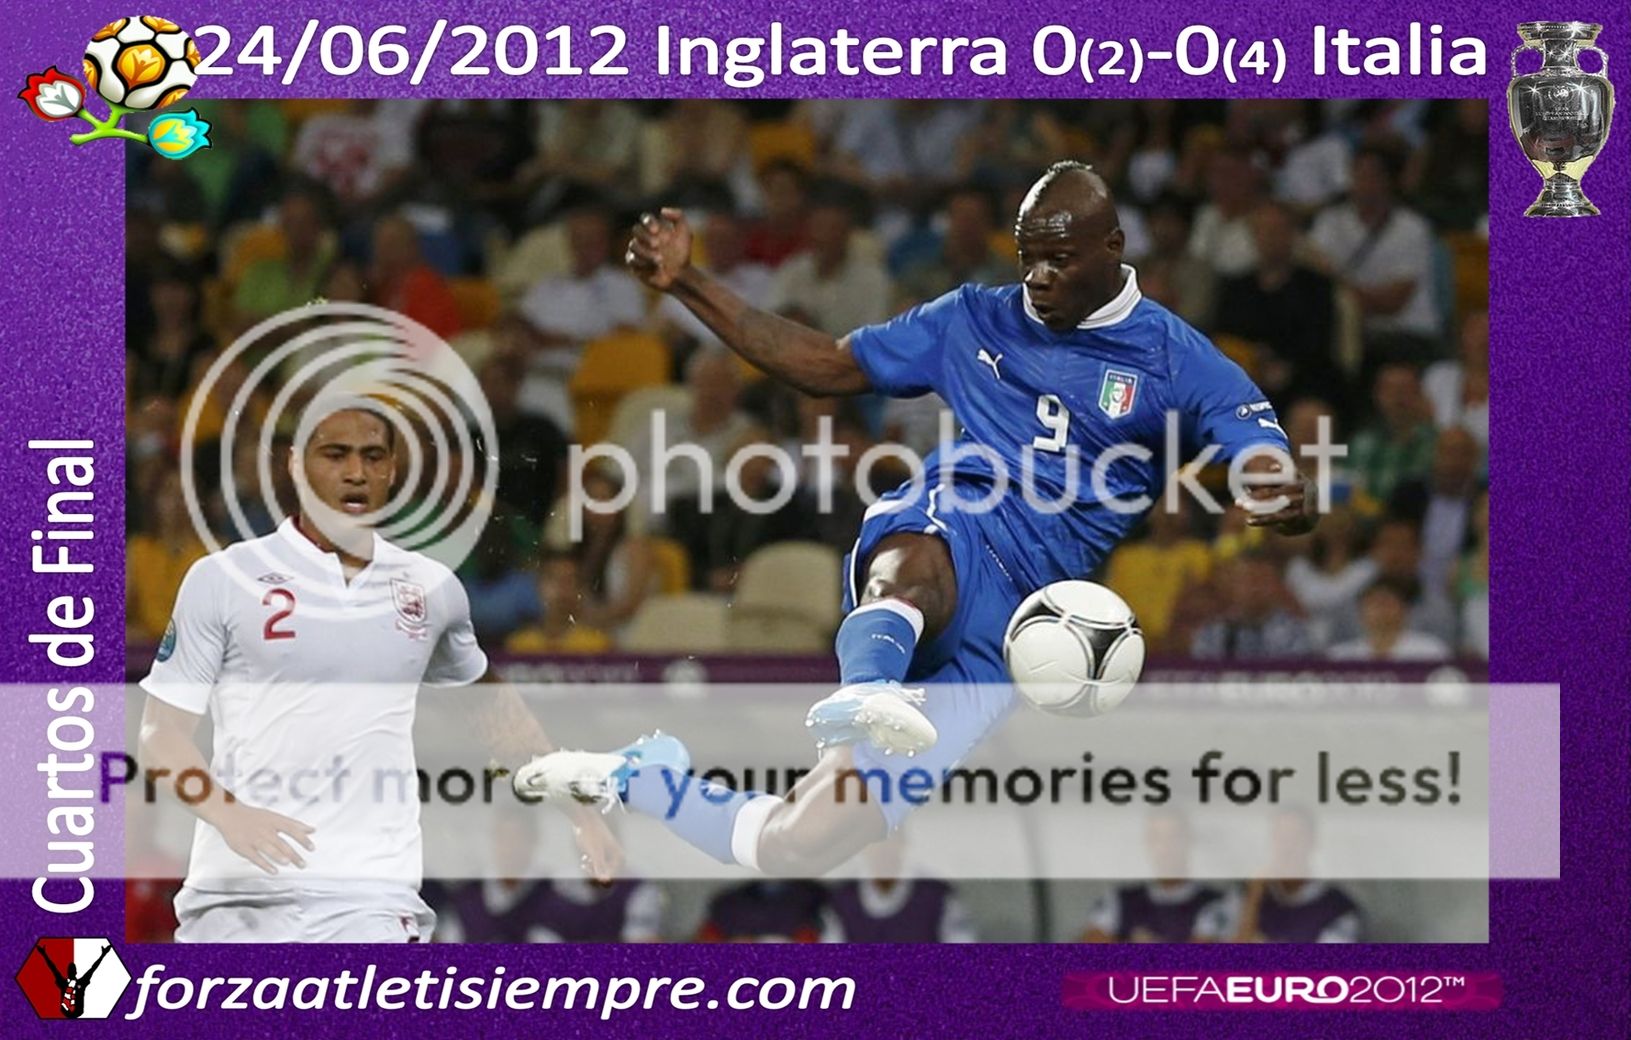 INGLATERRA 0(2) - ITALIA 0(4) - Un penalti para la eternidad 144Copiar-3